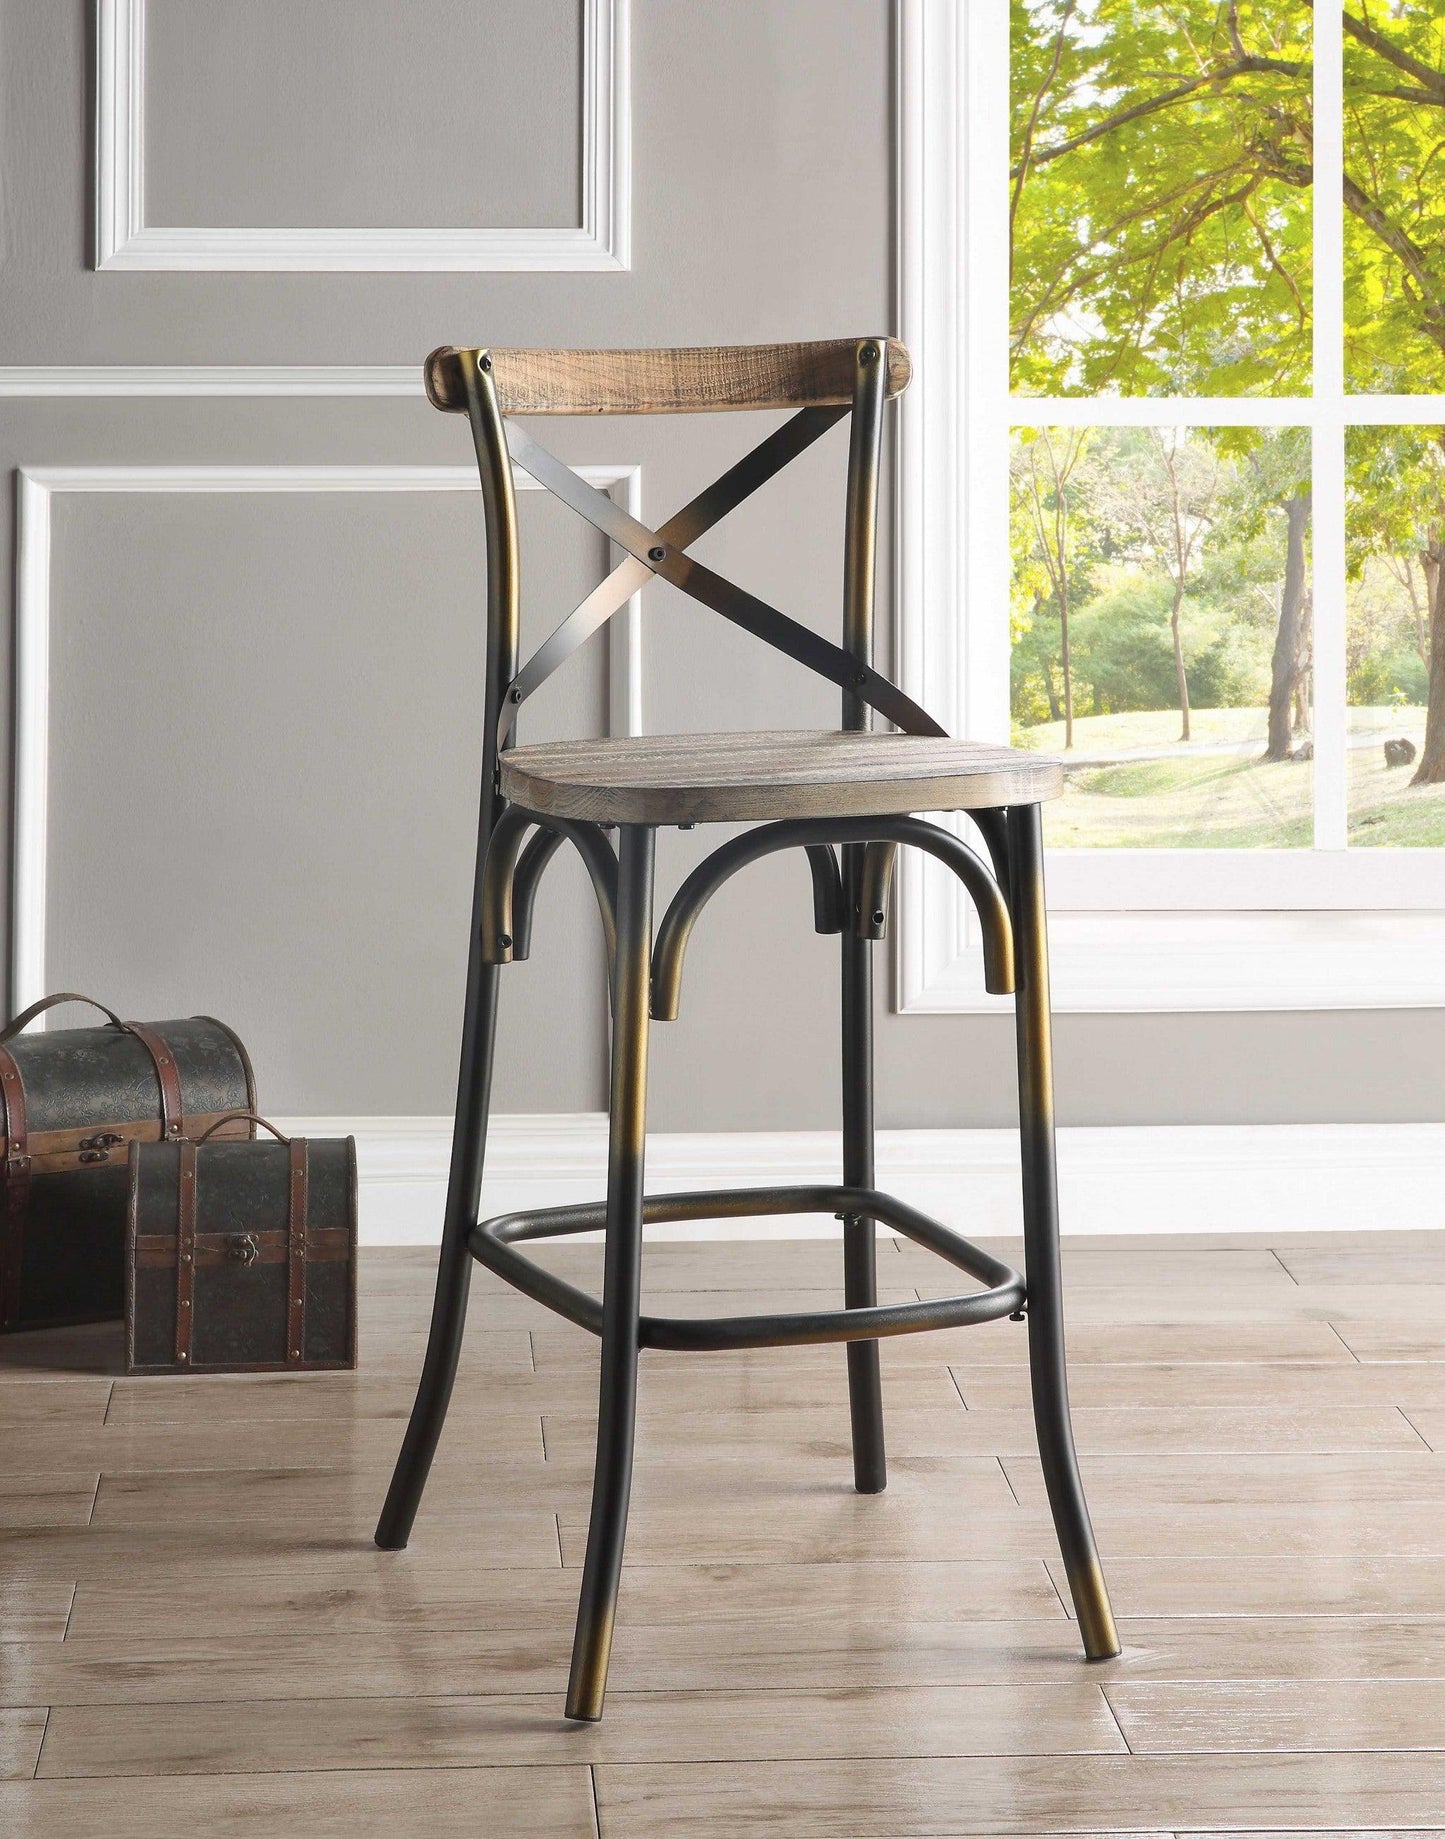 43" High Back Antiqued Copper And Oak Finish Bar Chair - FurniFindUSA